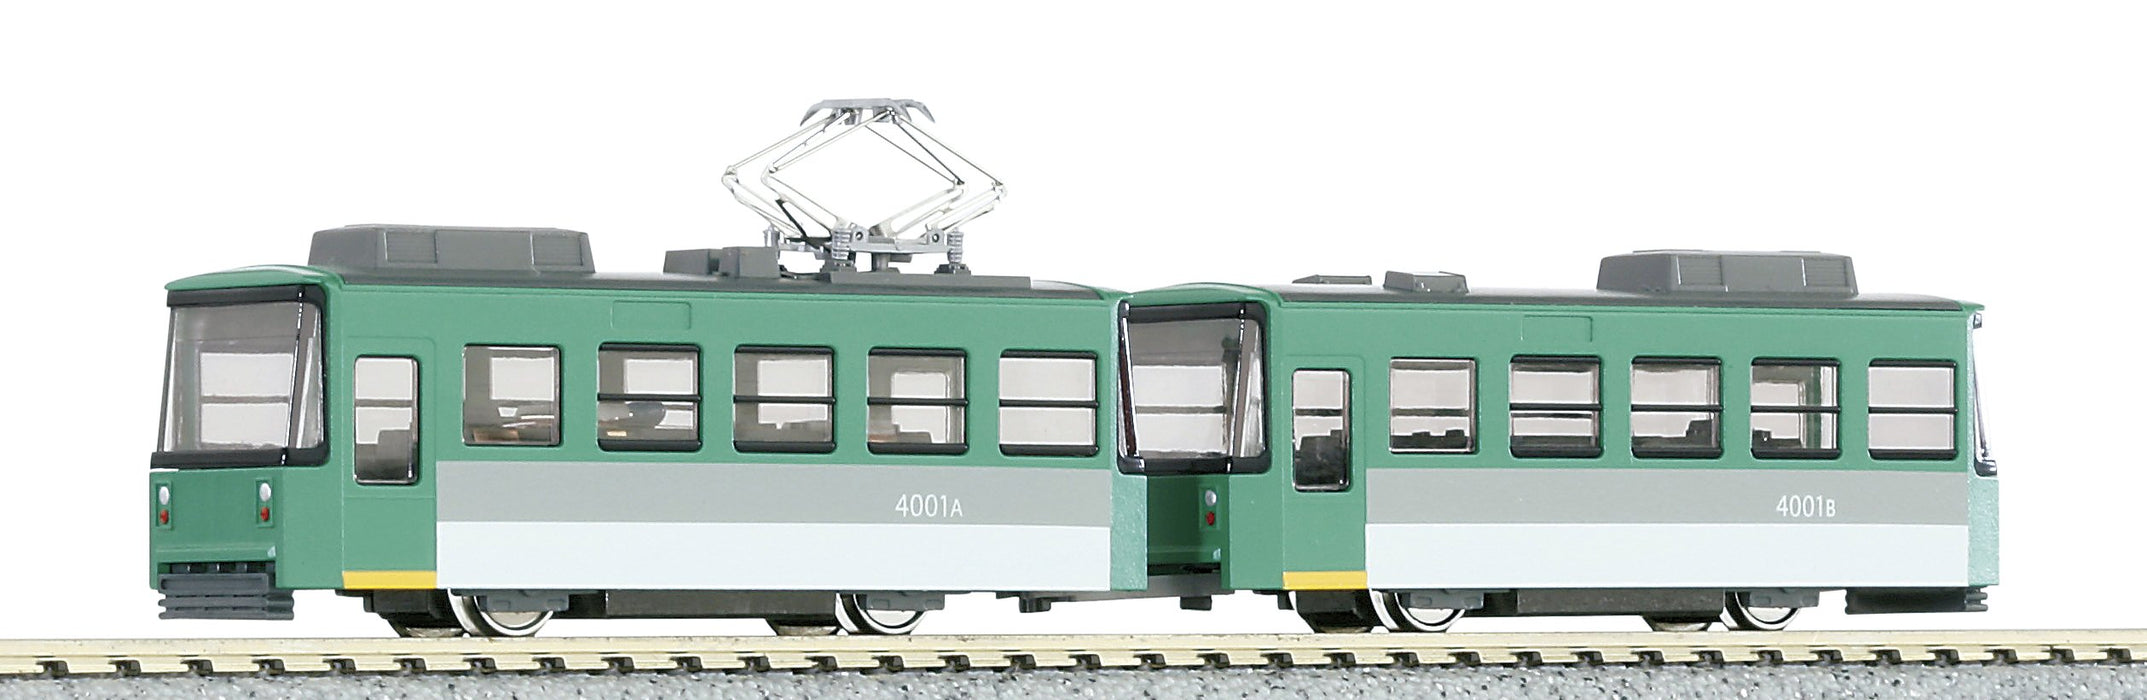 Kato N Gauge Model Train: 14-501-1 Chibiden My Town Tram Railway Set